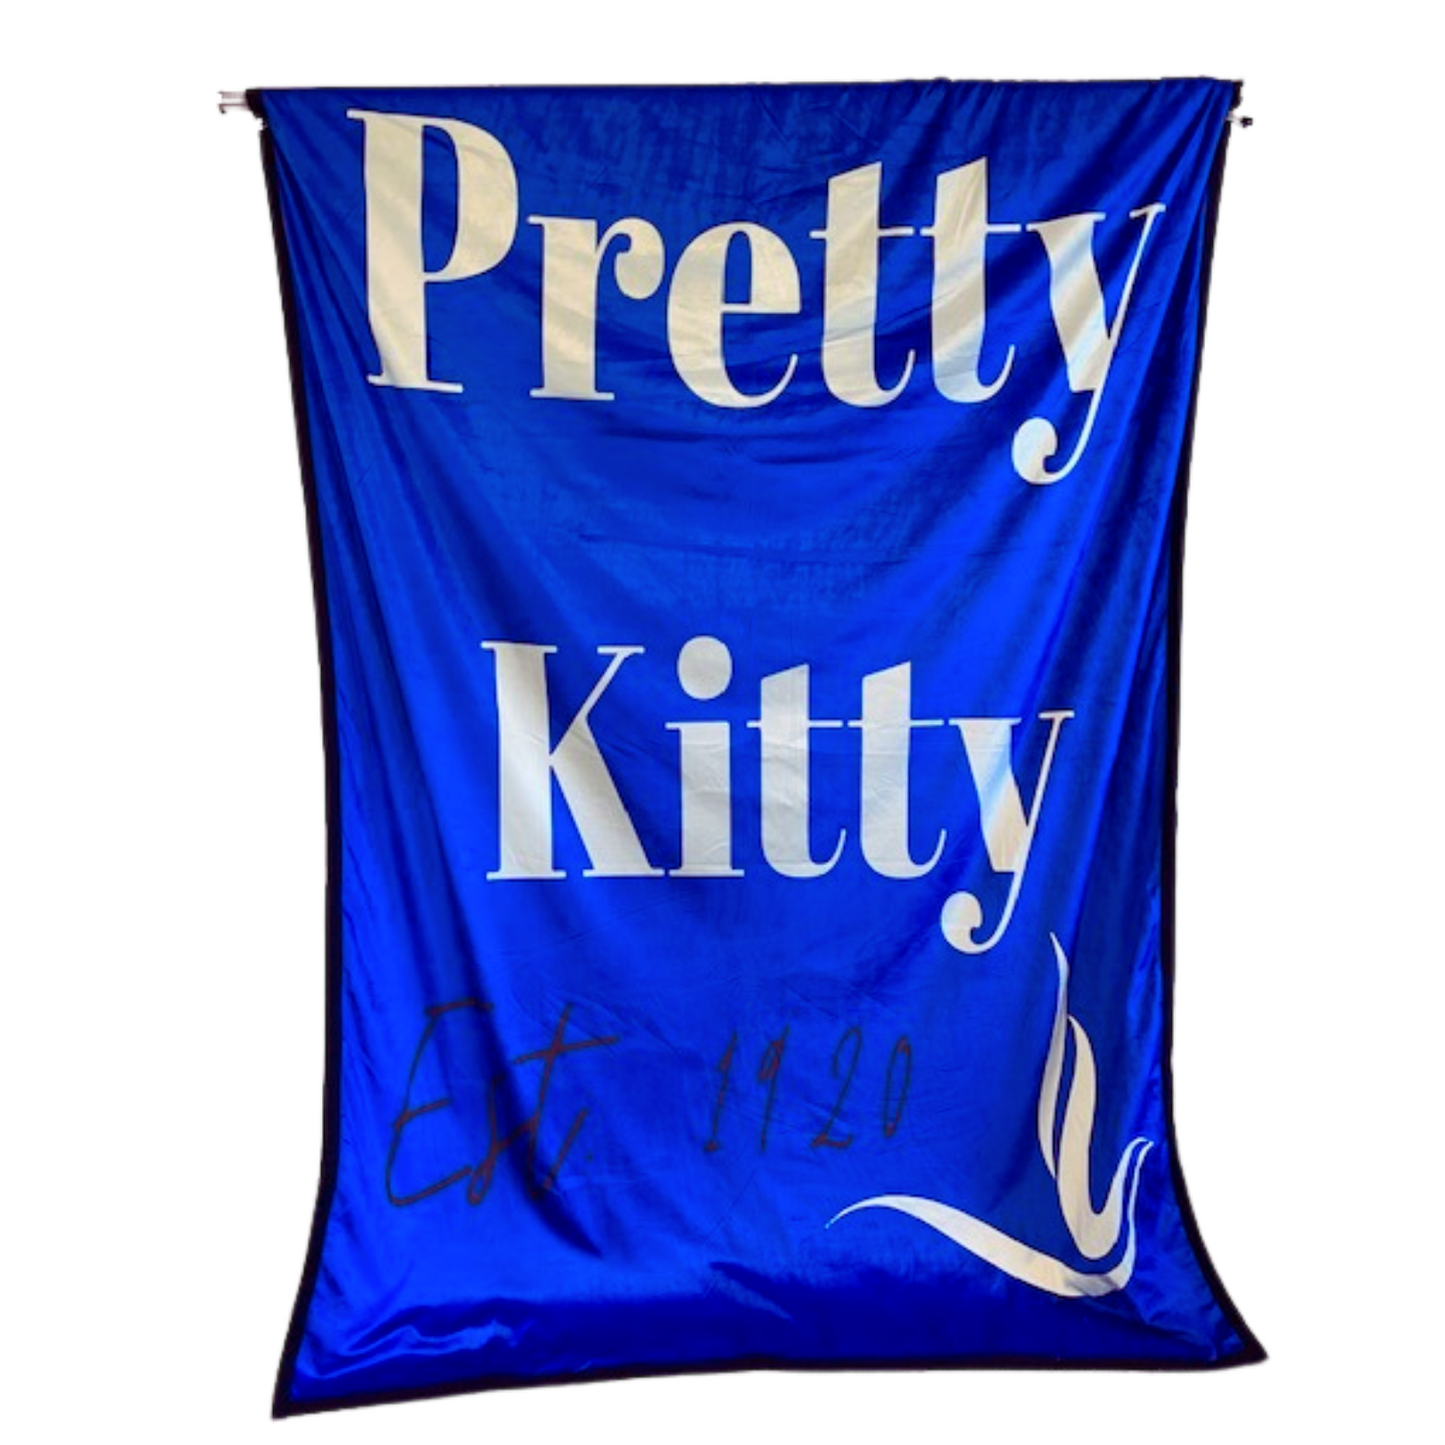 Pretty Kitty blanket